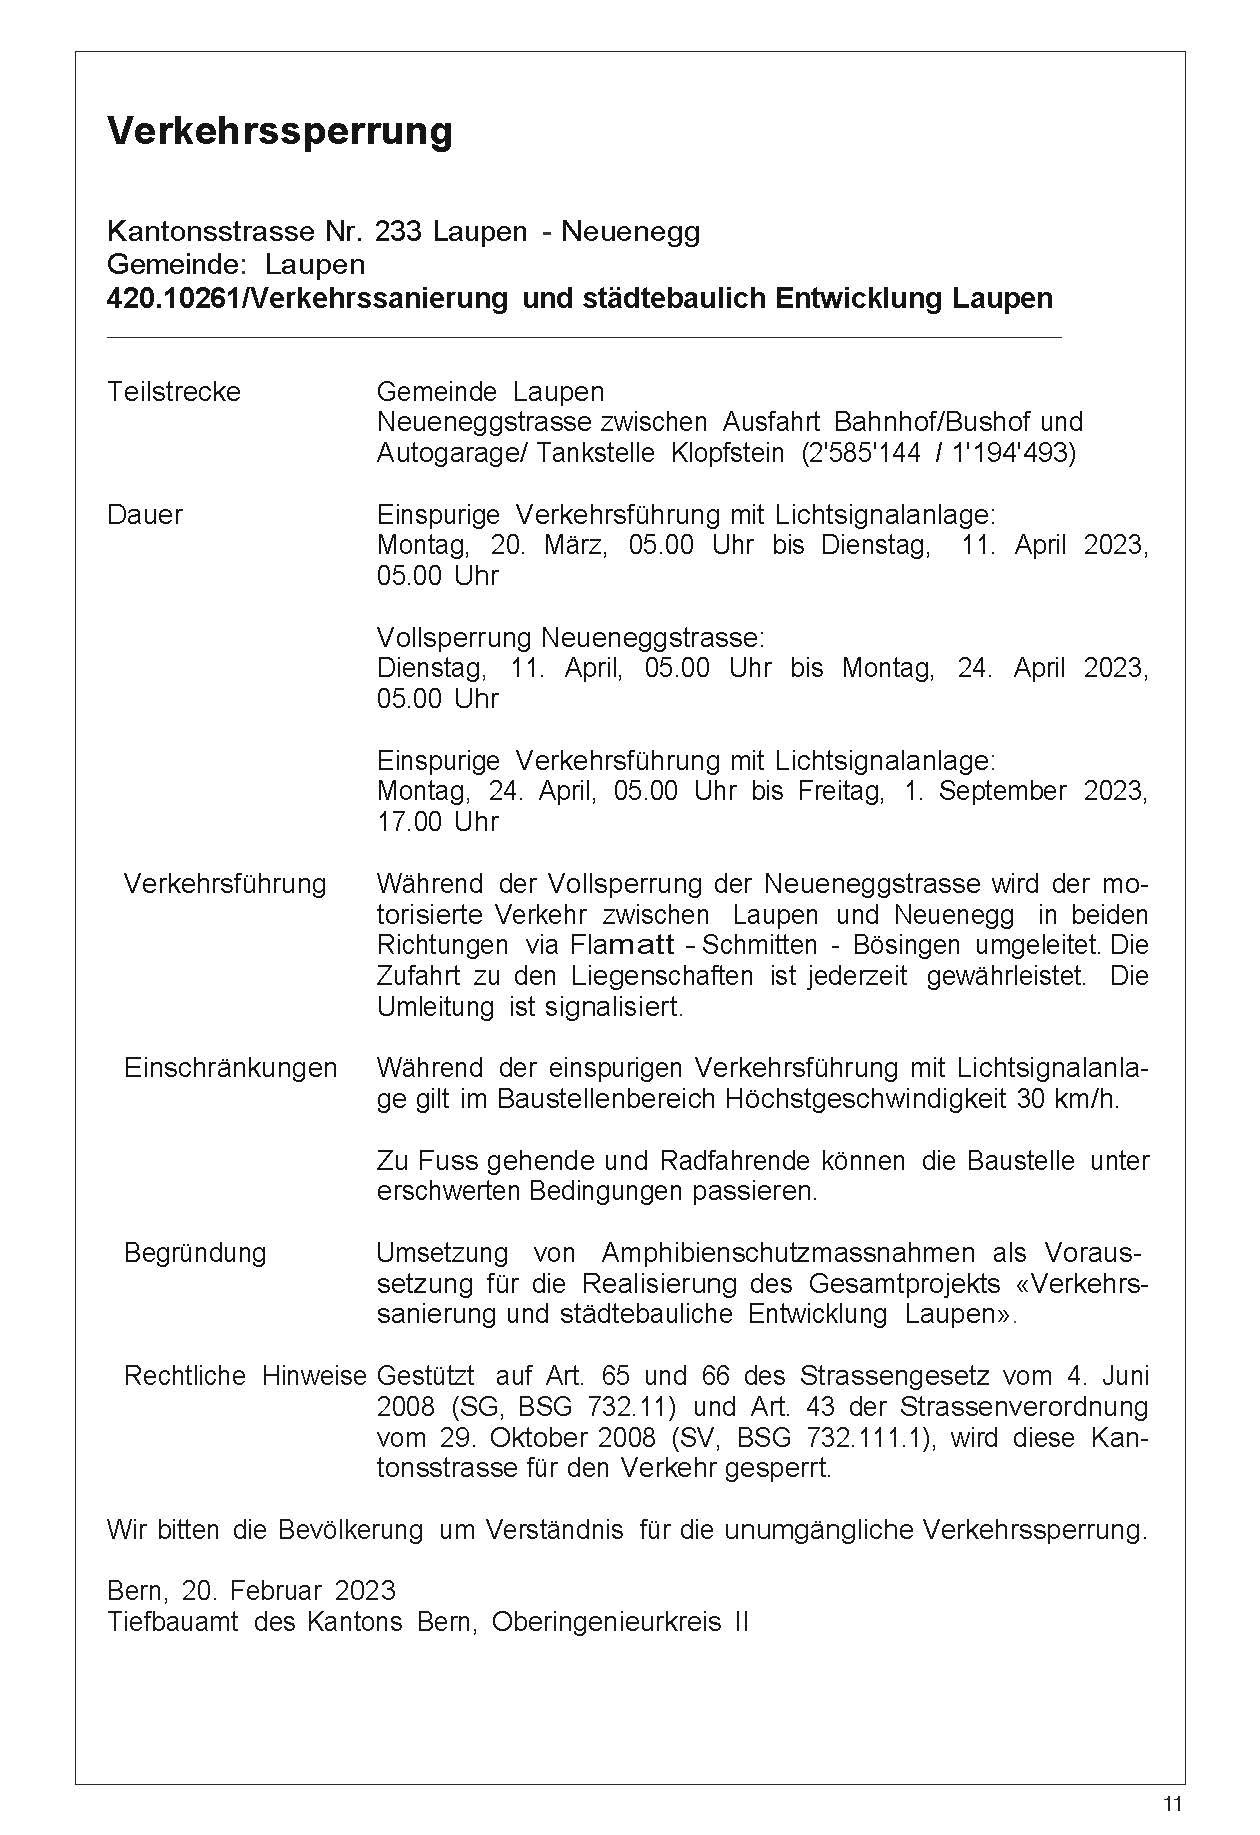 Verkehrssperrung Kantonsstrasse Laupen - Neuenegg ab 20.03 - 01.03.2023